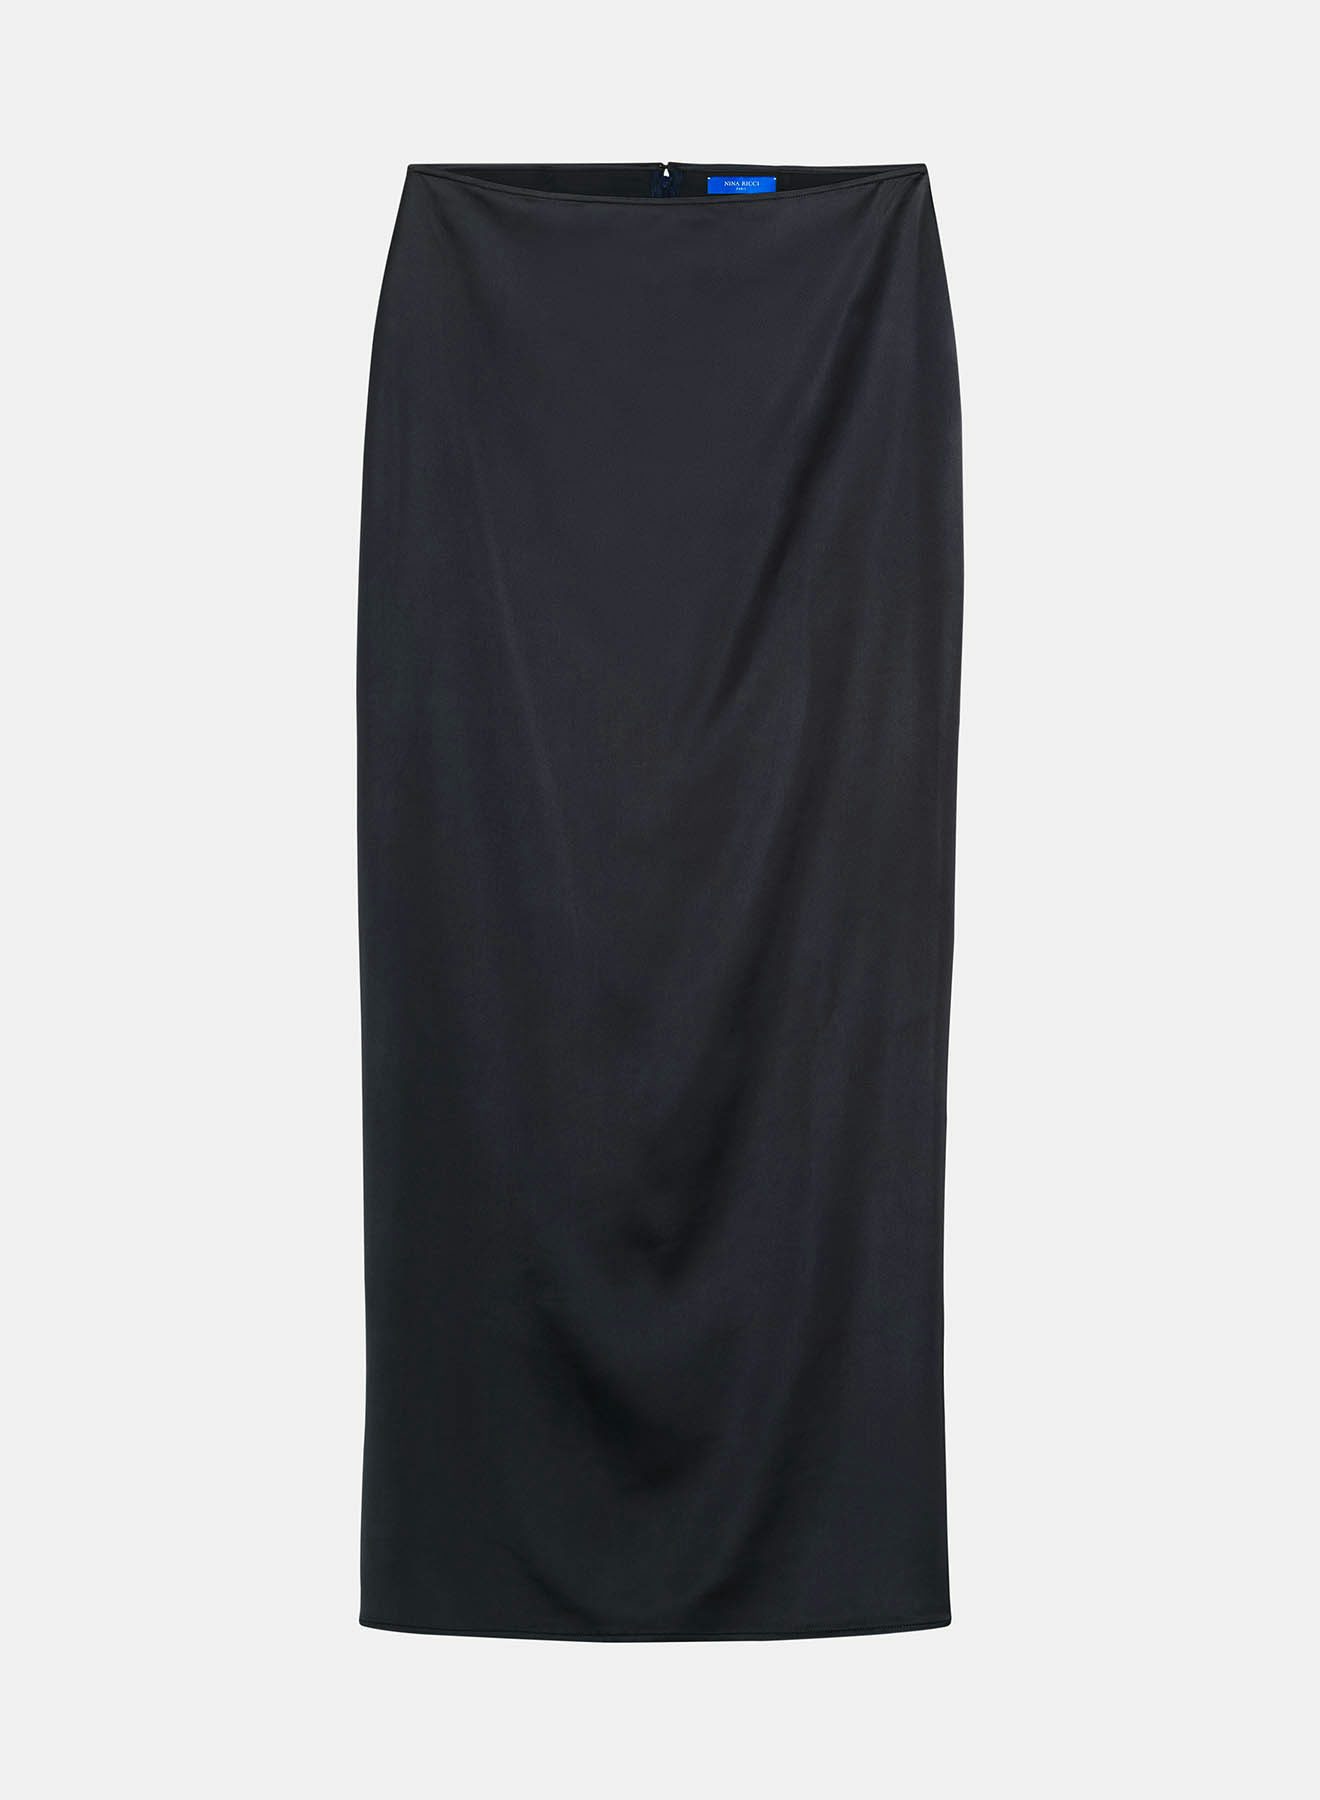 Satin straight skirt dark navy - Nina Ricci